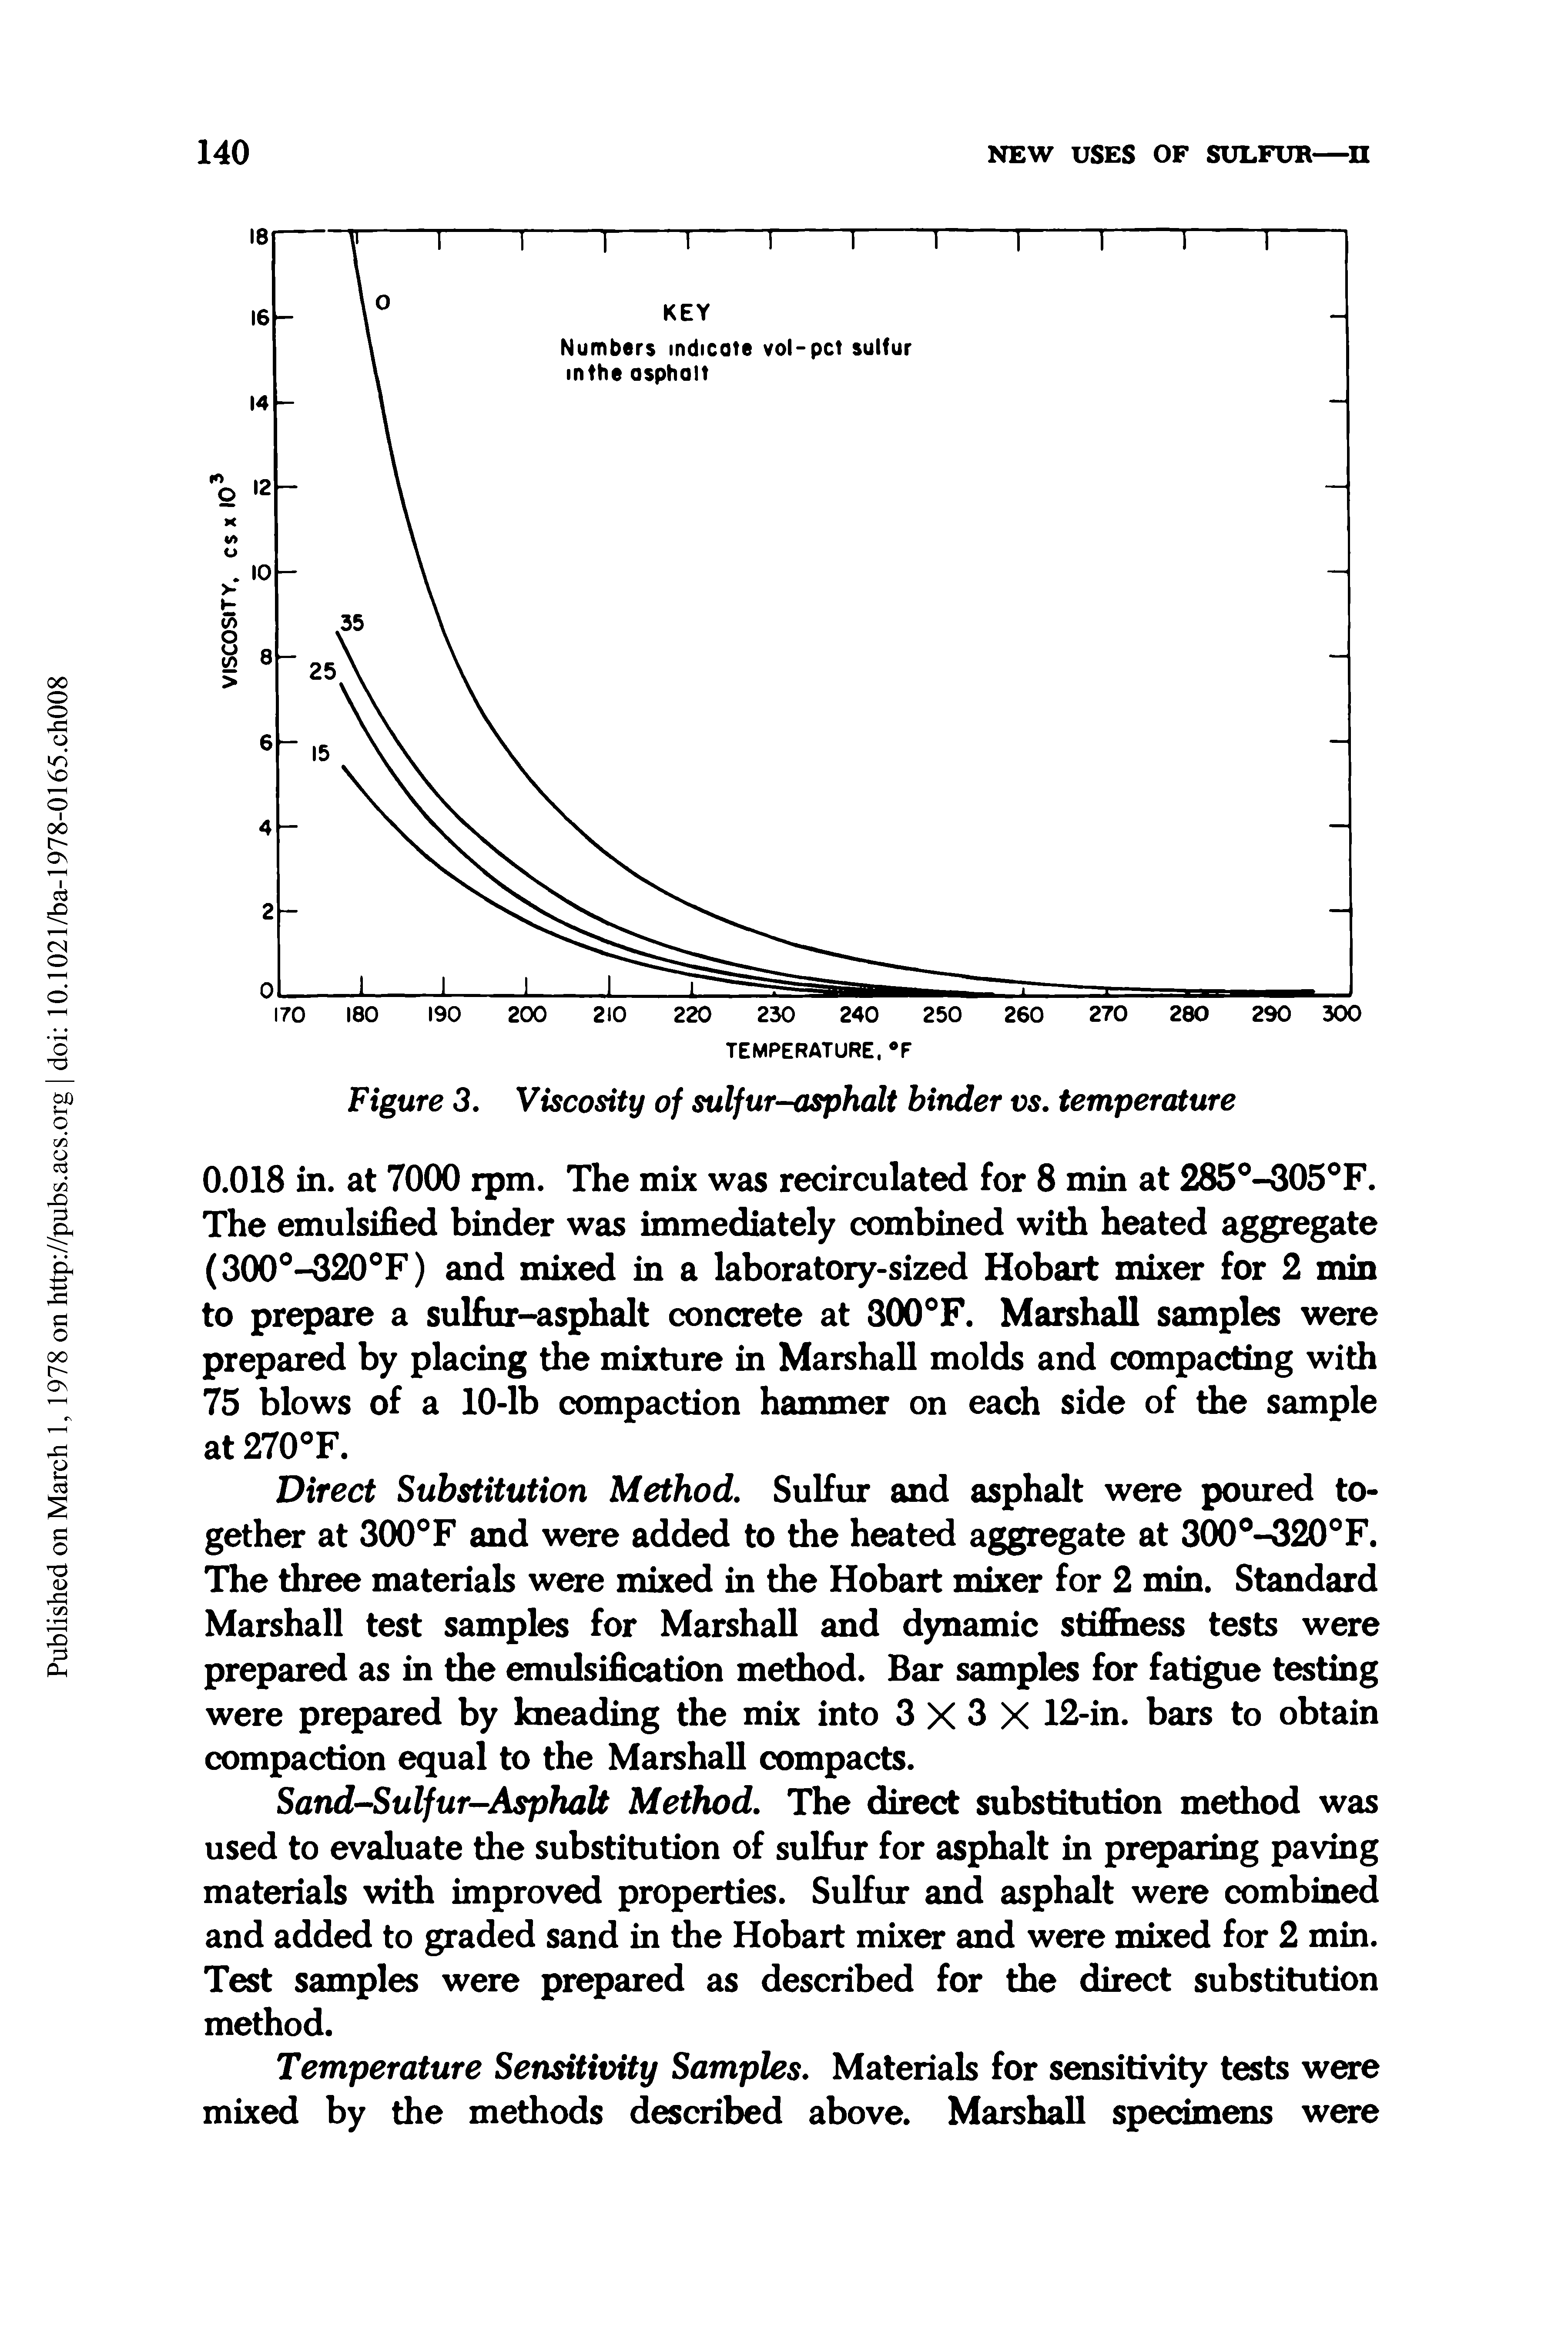 Figure 3. Viscosity of sulfur-asphalt binder vs. temperature...